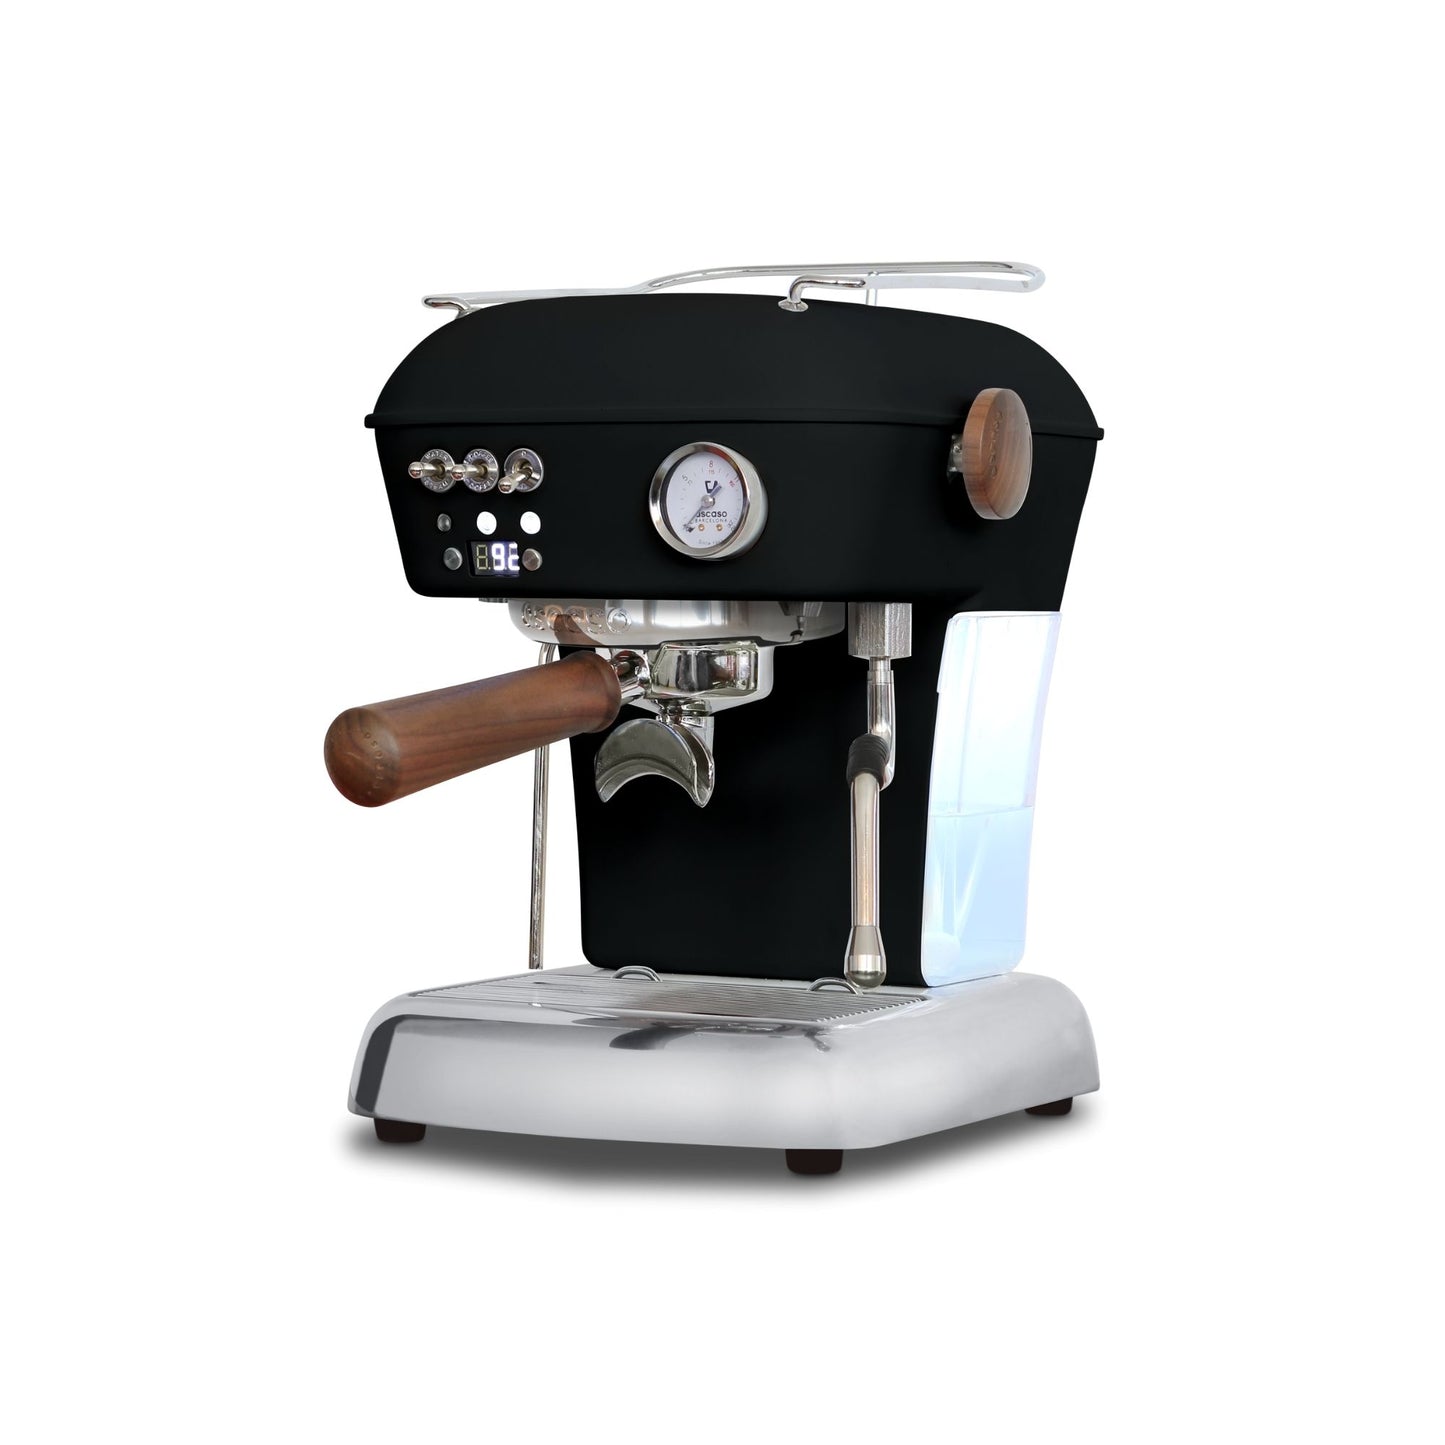 Dream One Espresso Machine | Ascaso Canada